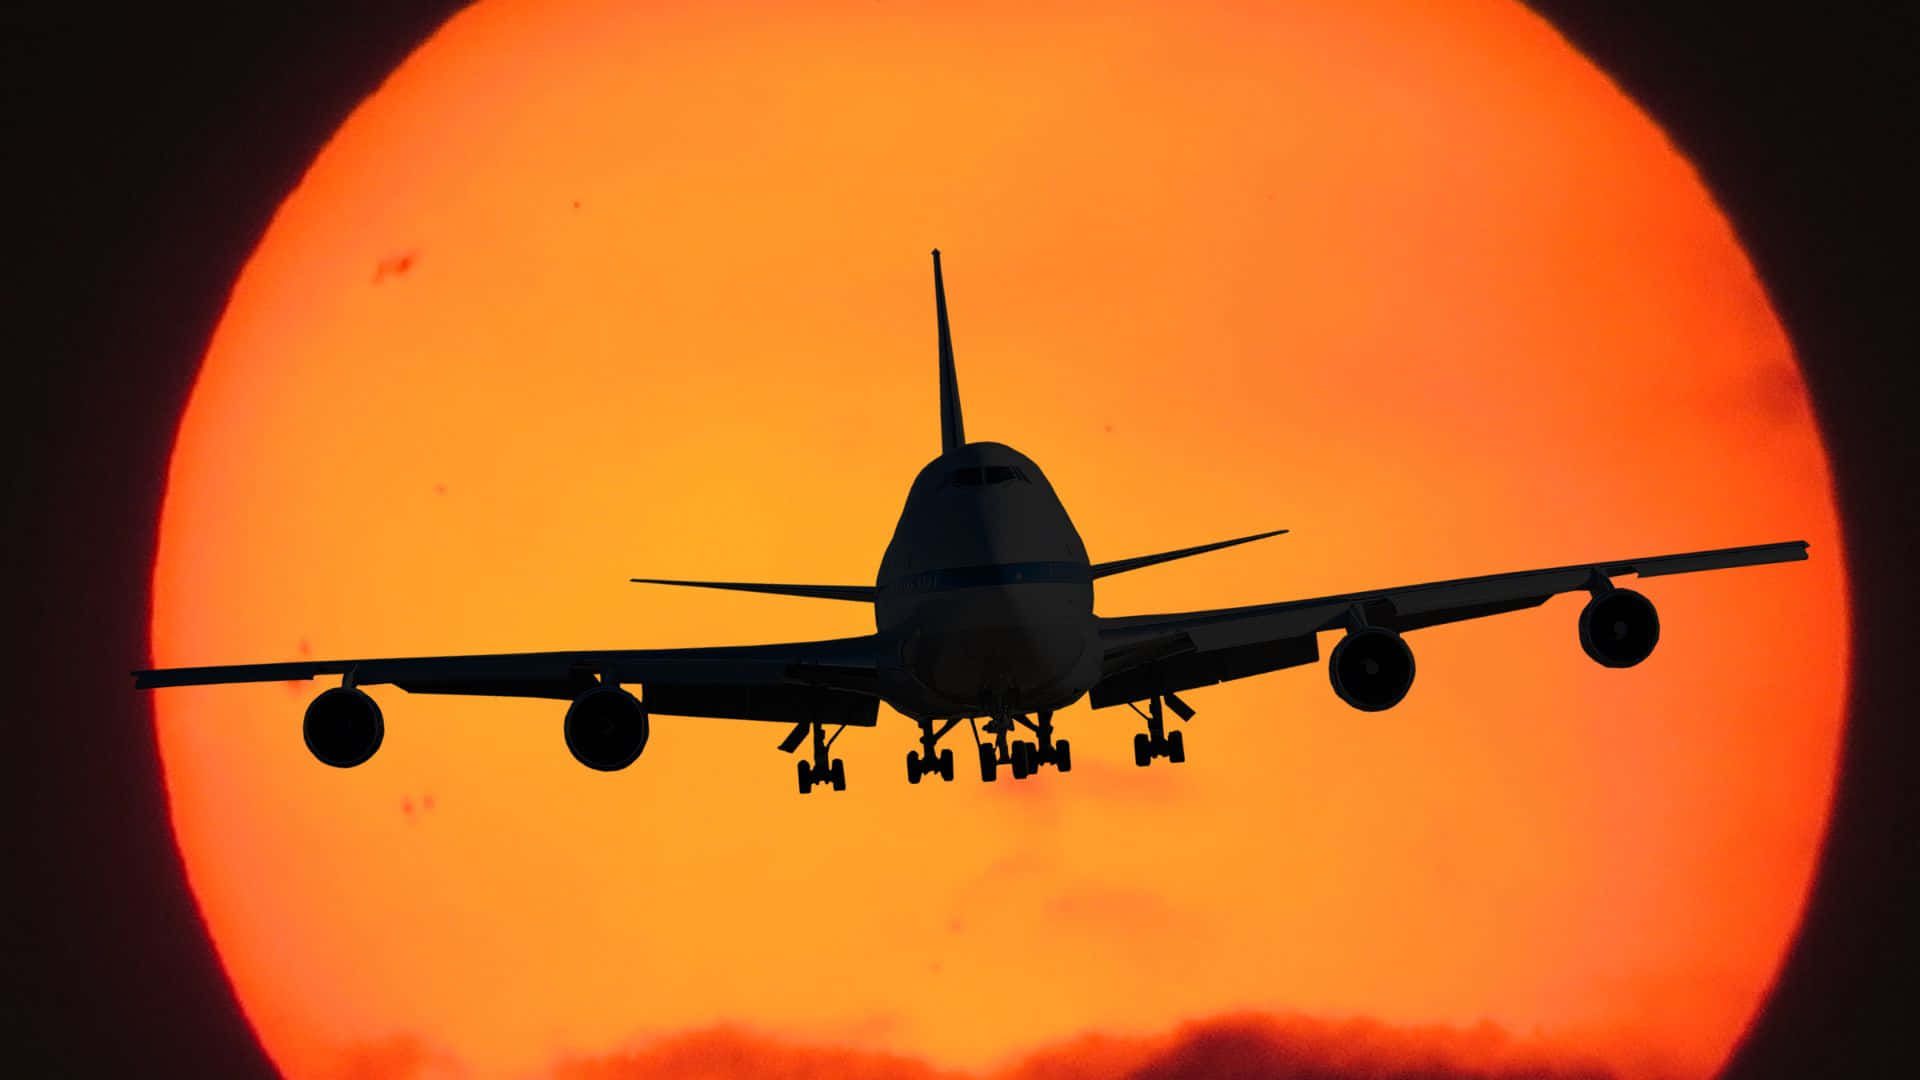  Boeing Hintergrundbild 1920x1080. Download Airplane And Sunset Aesthetic Background